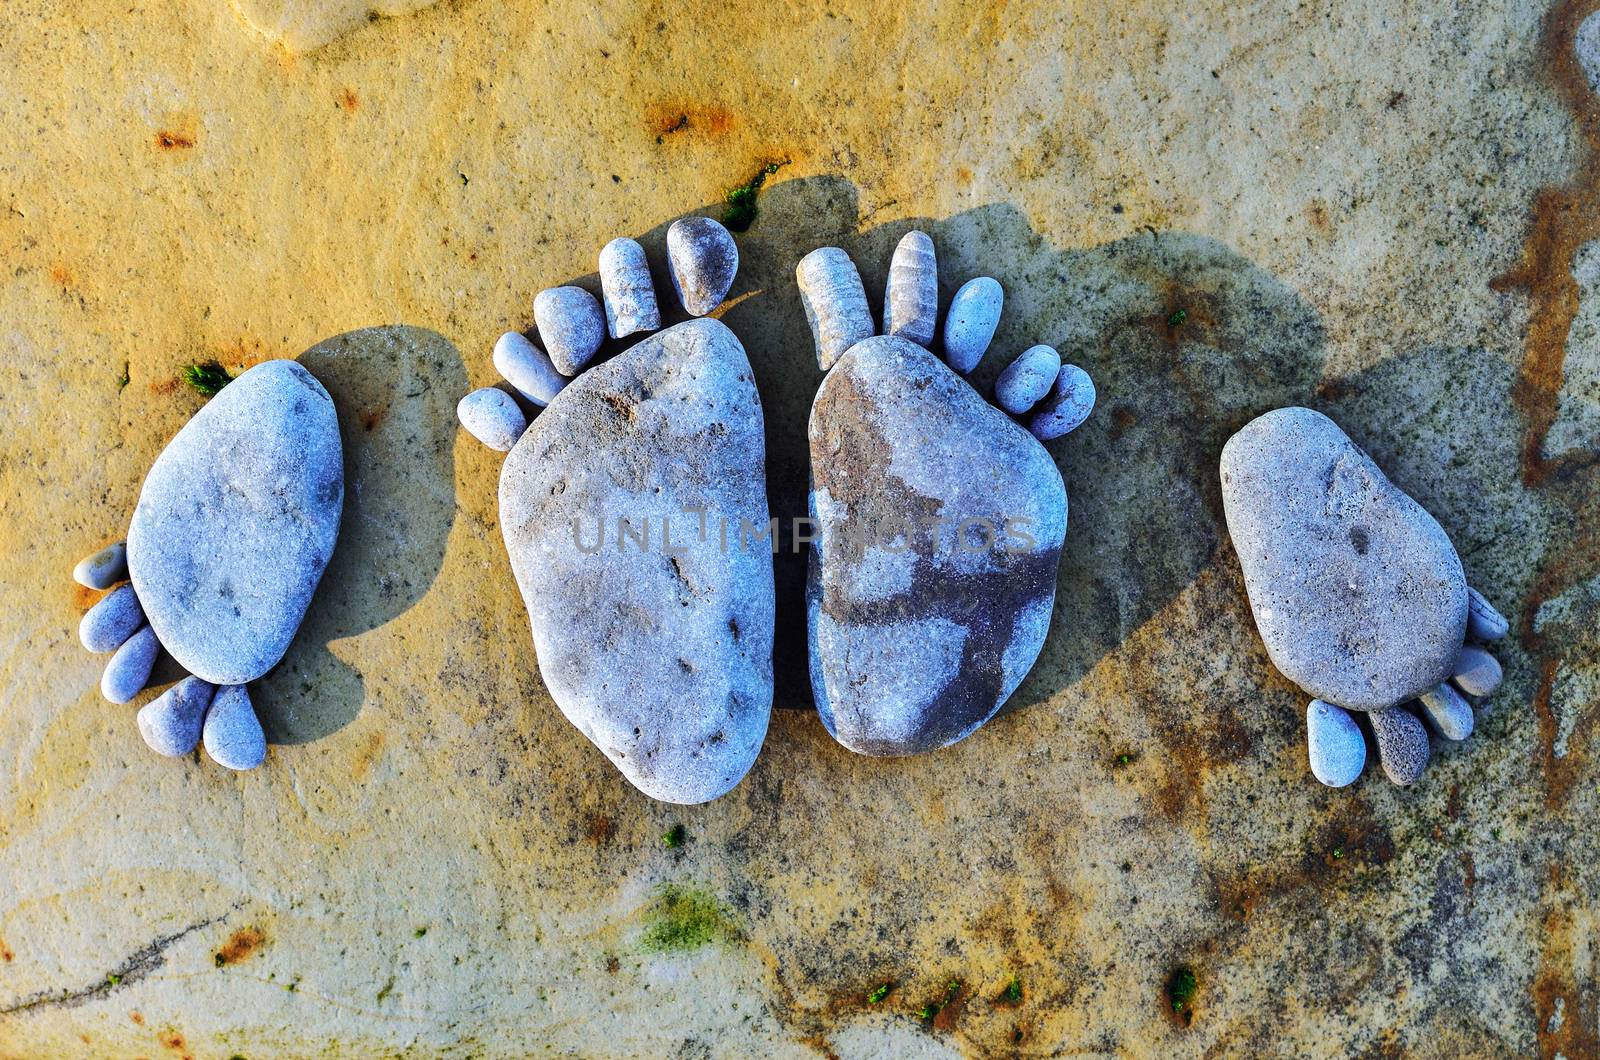 Footprints by styf22